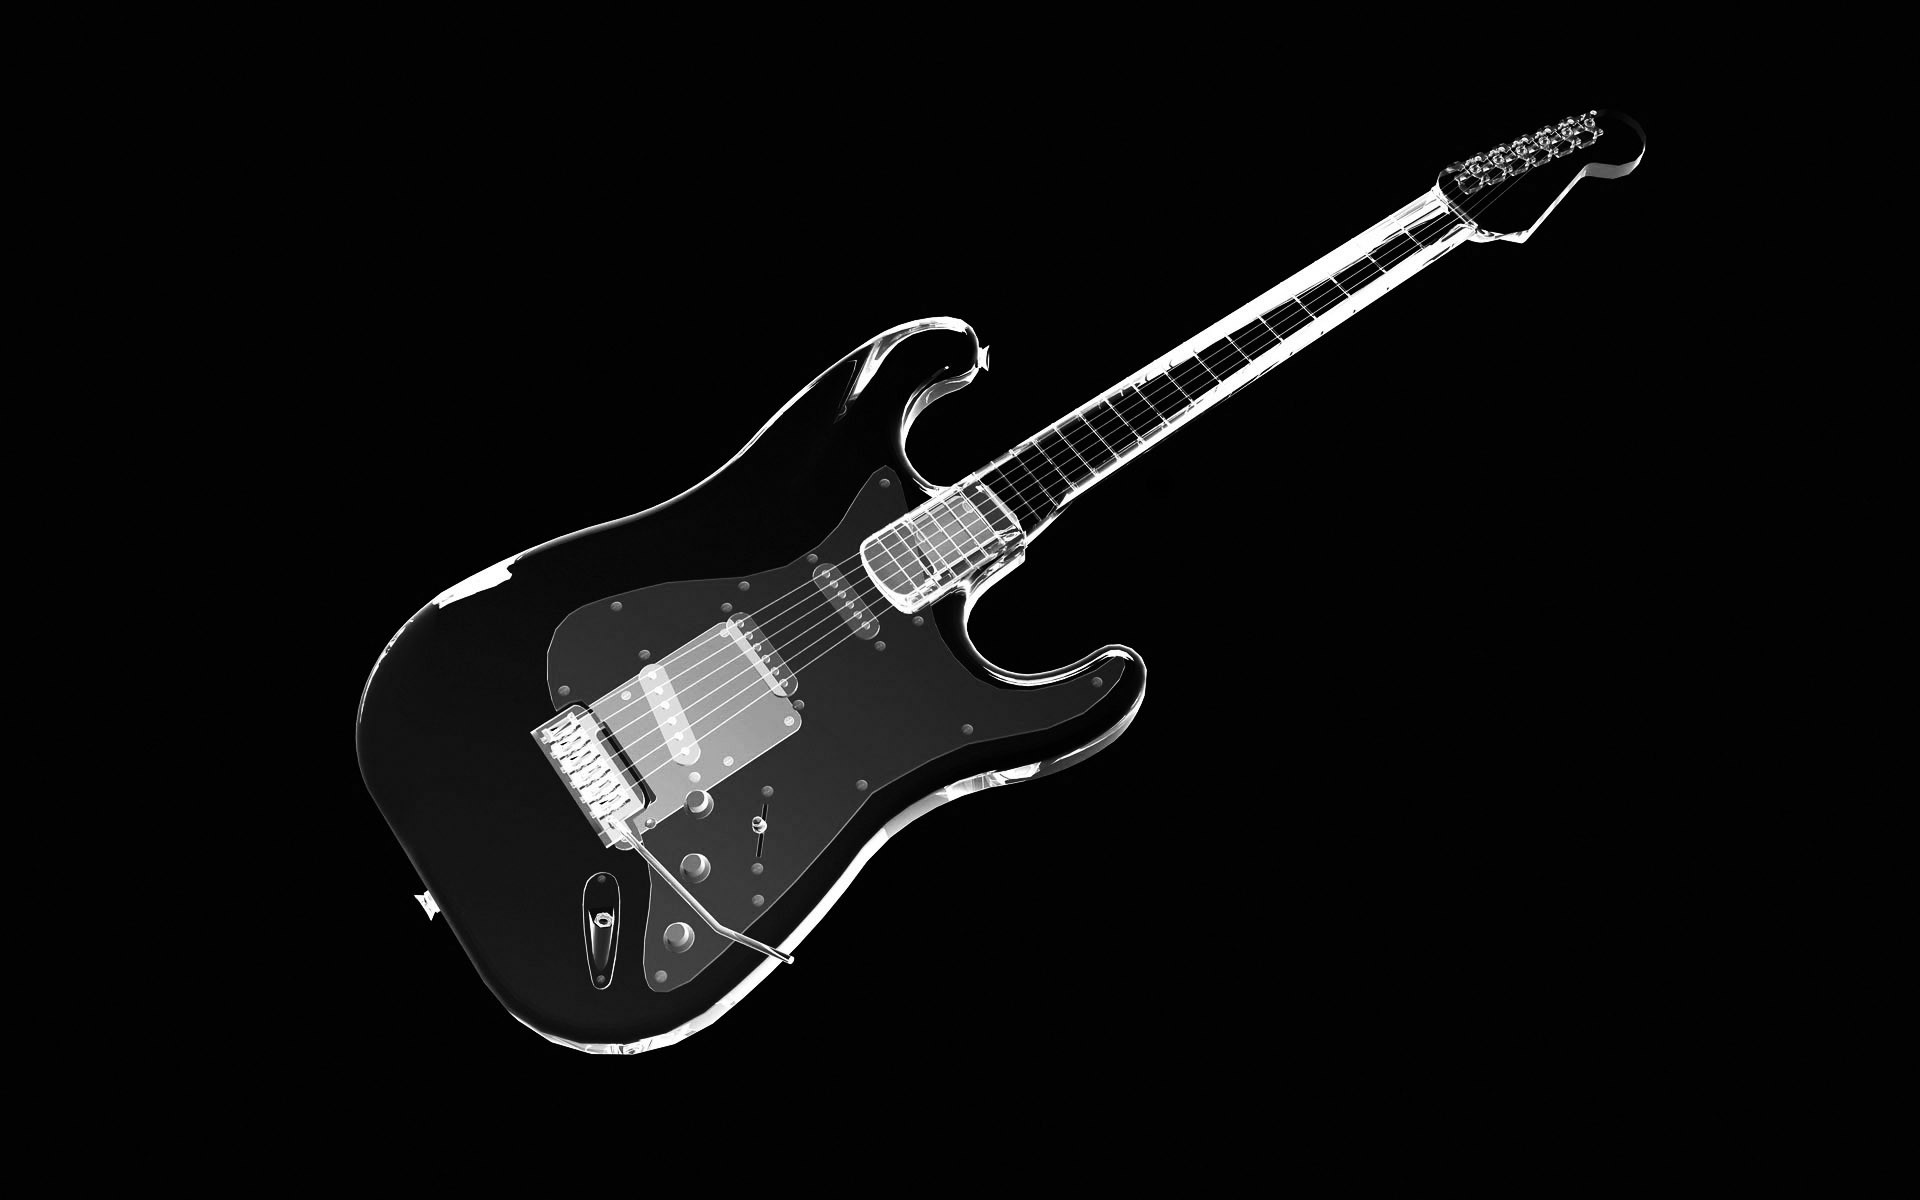 General 1920x1200 monochrome musical instrument guitar simple background black background